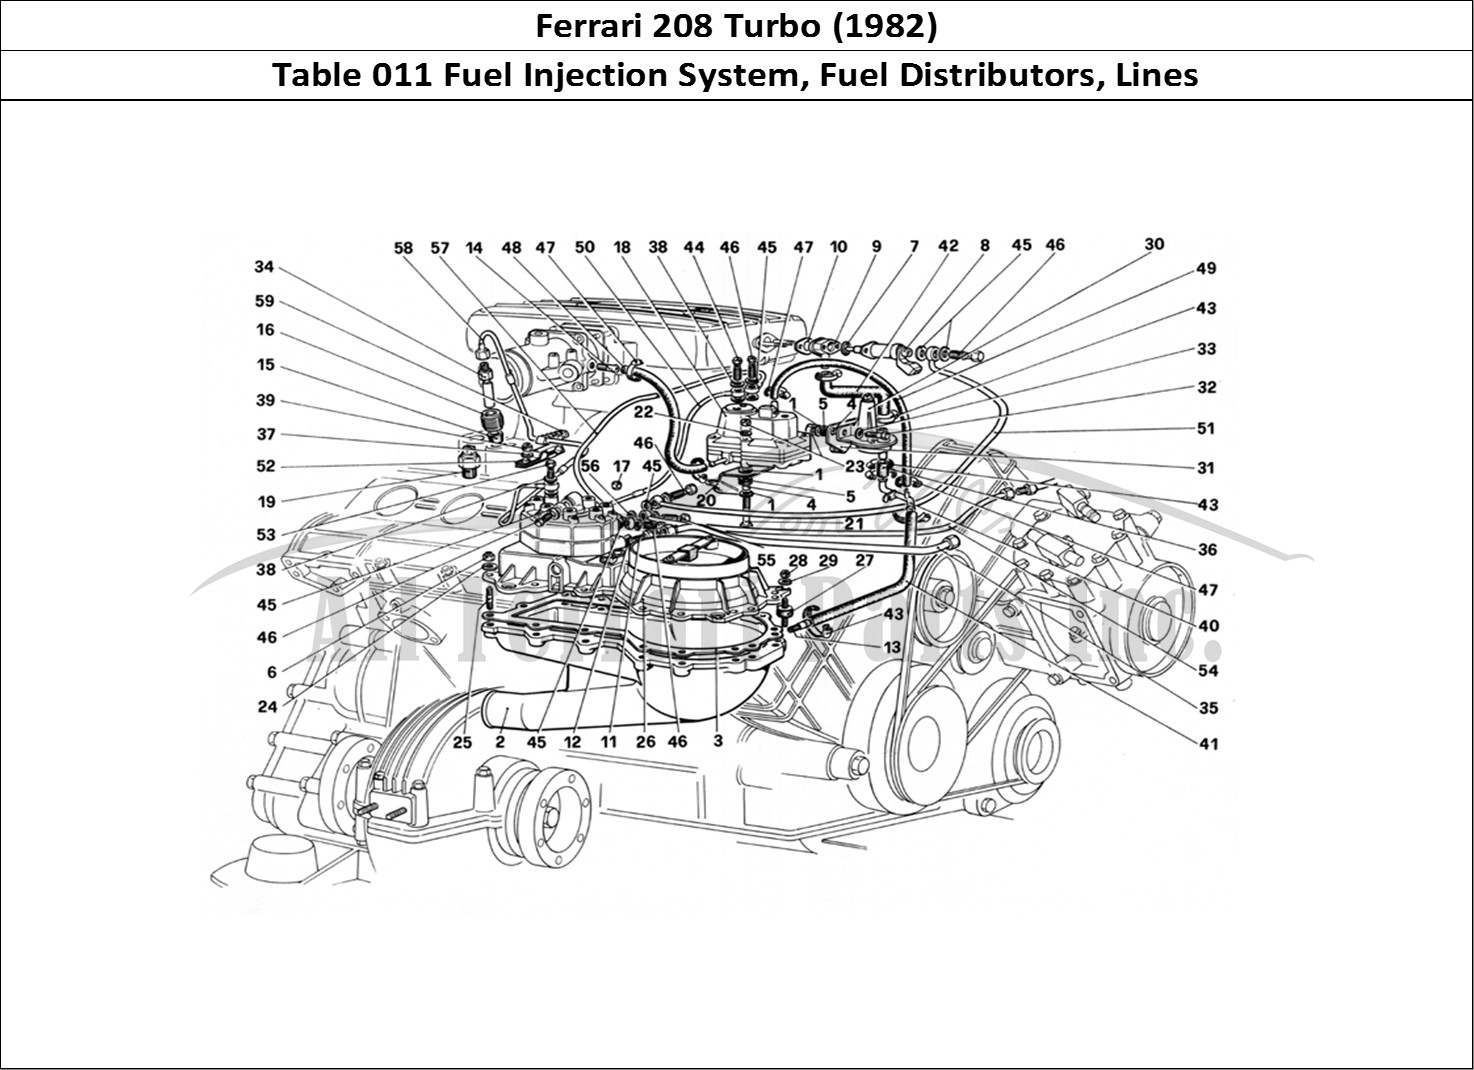 Ferrari Parts Ferrari 208 Turbo (1982) Page 011 Fuel Injection System - F